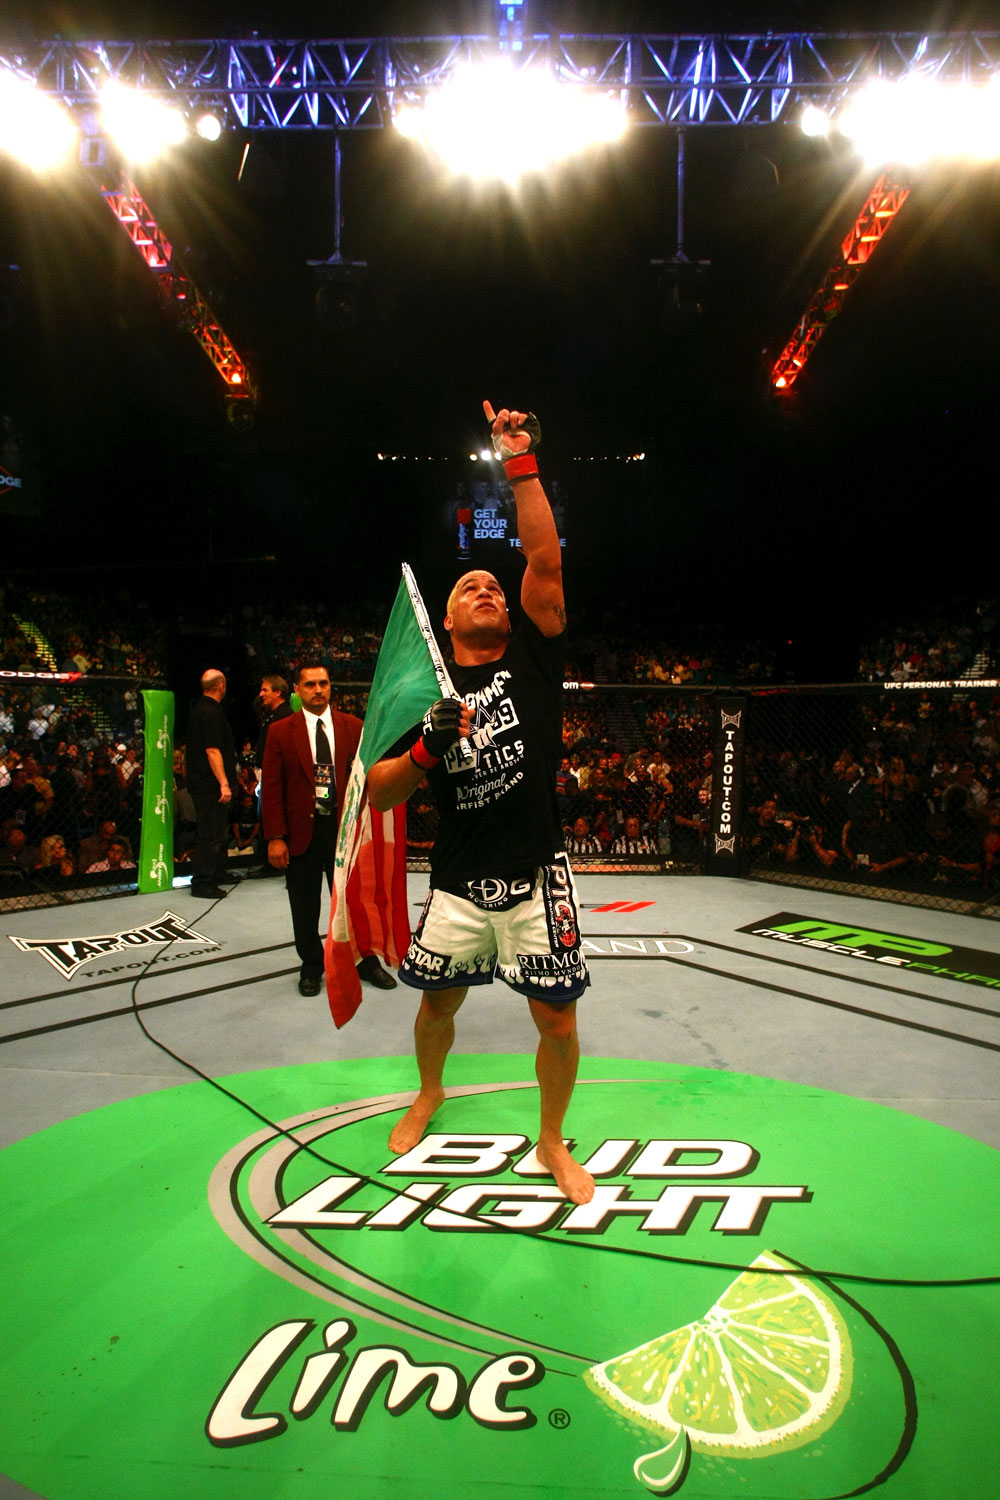 UFC light heavyweight Tito Ortiz